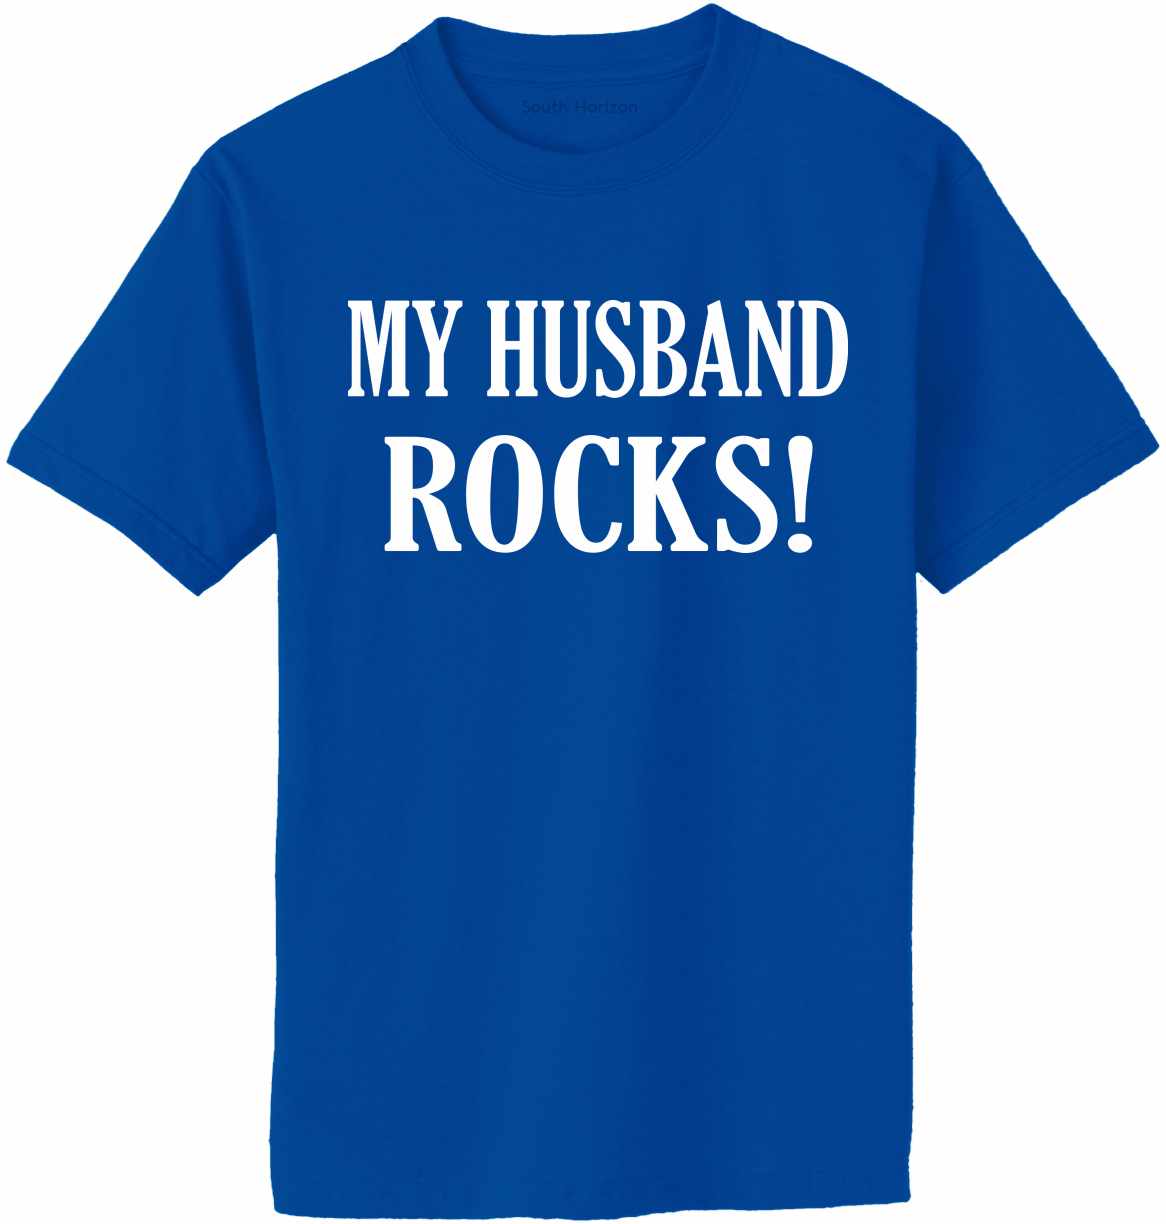 MY HUSBAND ROCKS! Adult T-Shirt (#724-1)